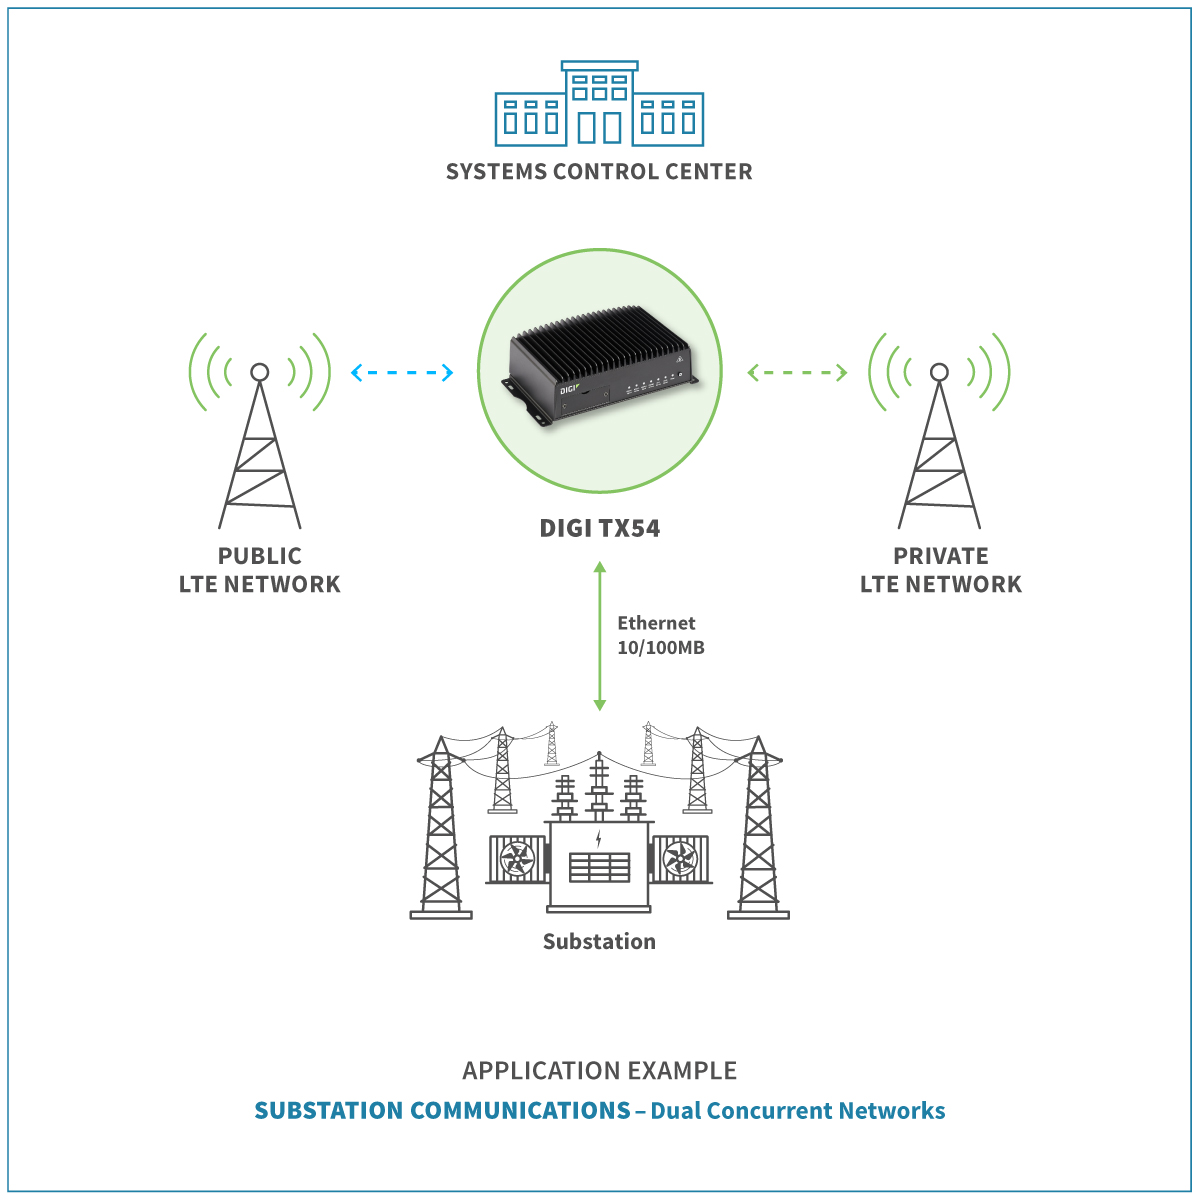 Substation communication - dual concurrent networks